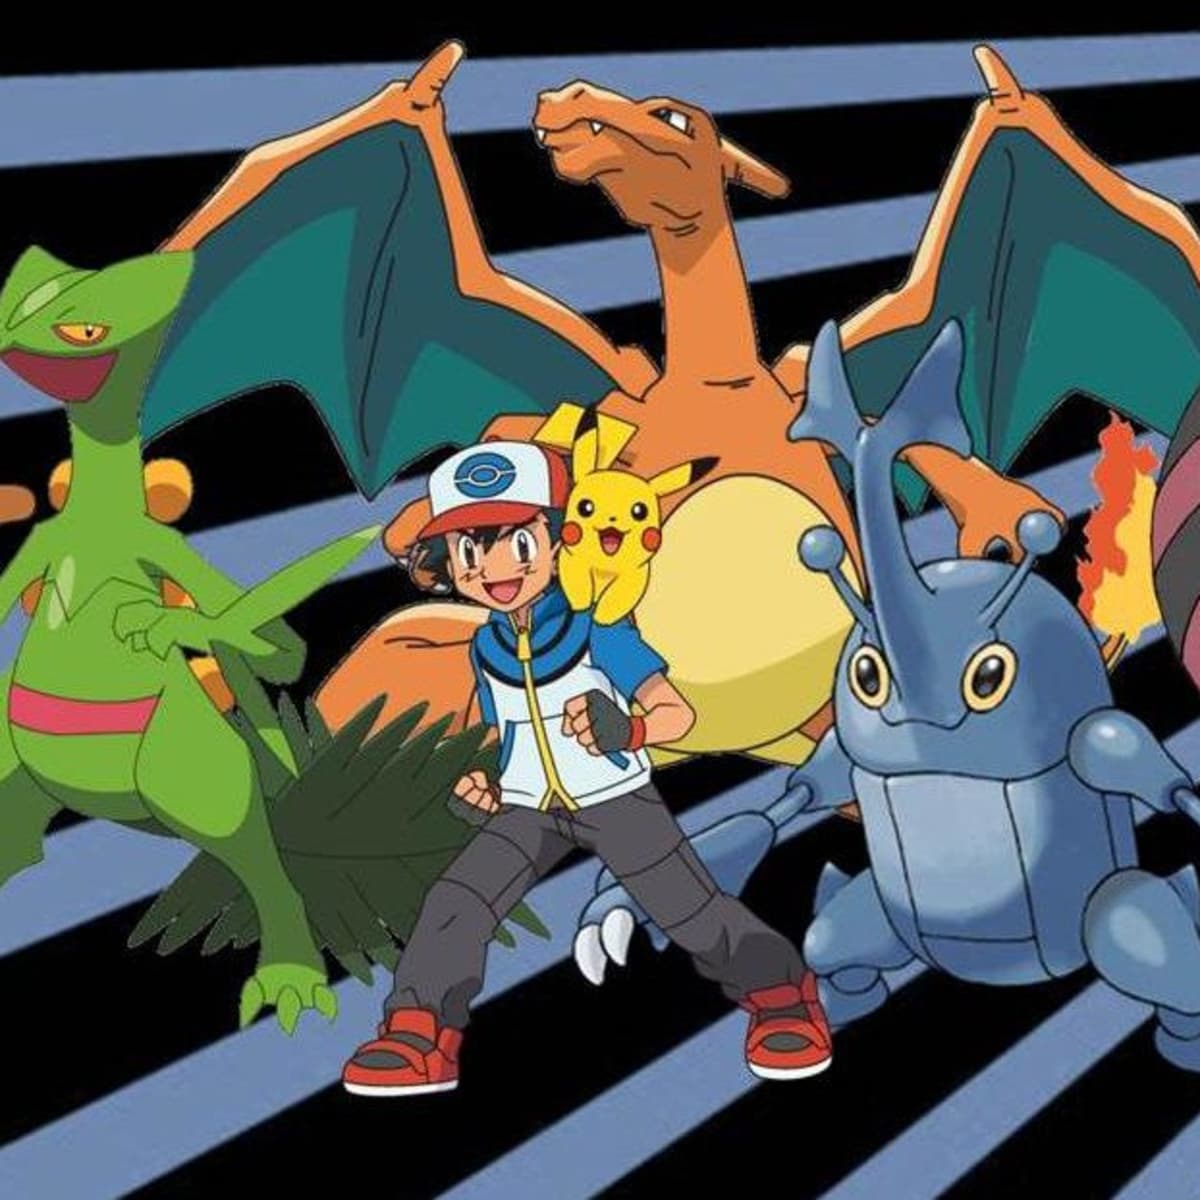 Final ranking of Pokémon anime groups with Ash & his friends? : r/ pokemonanime